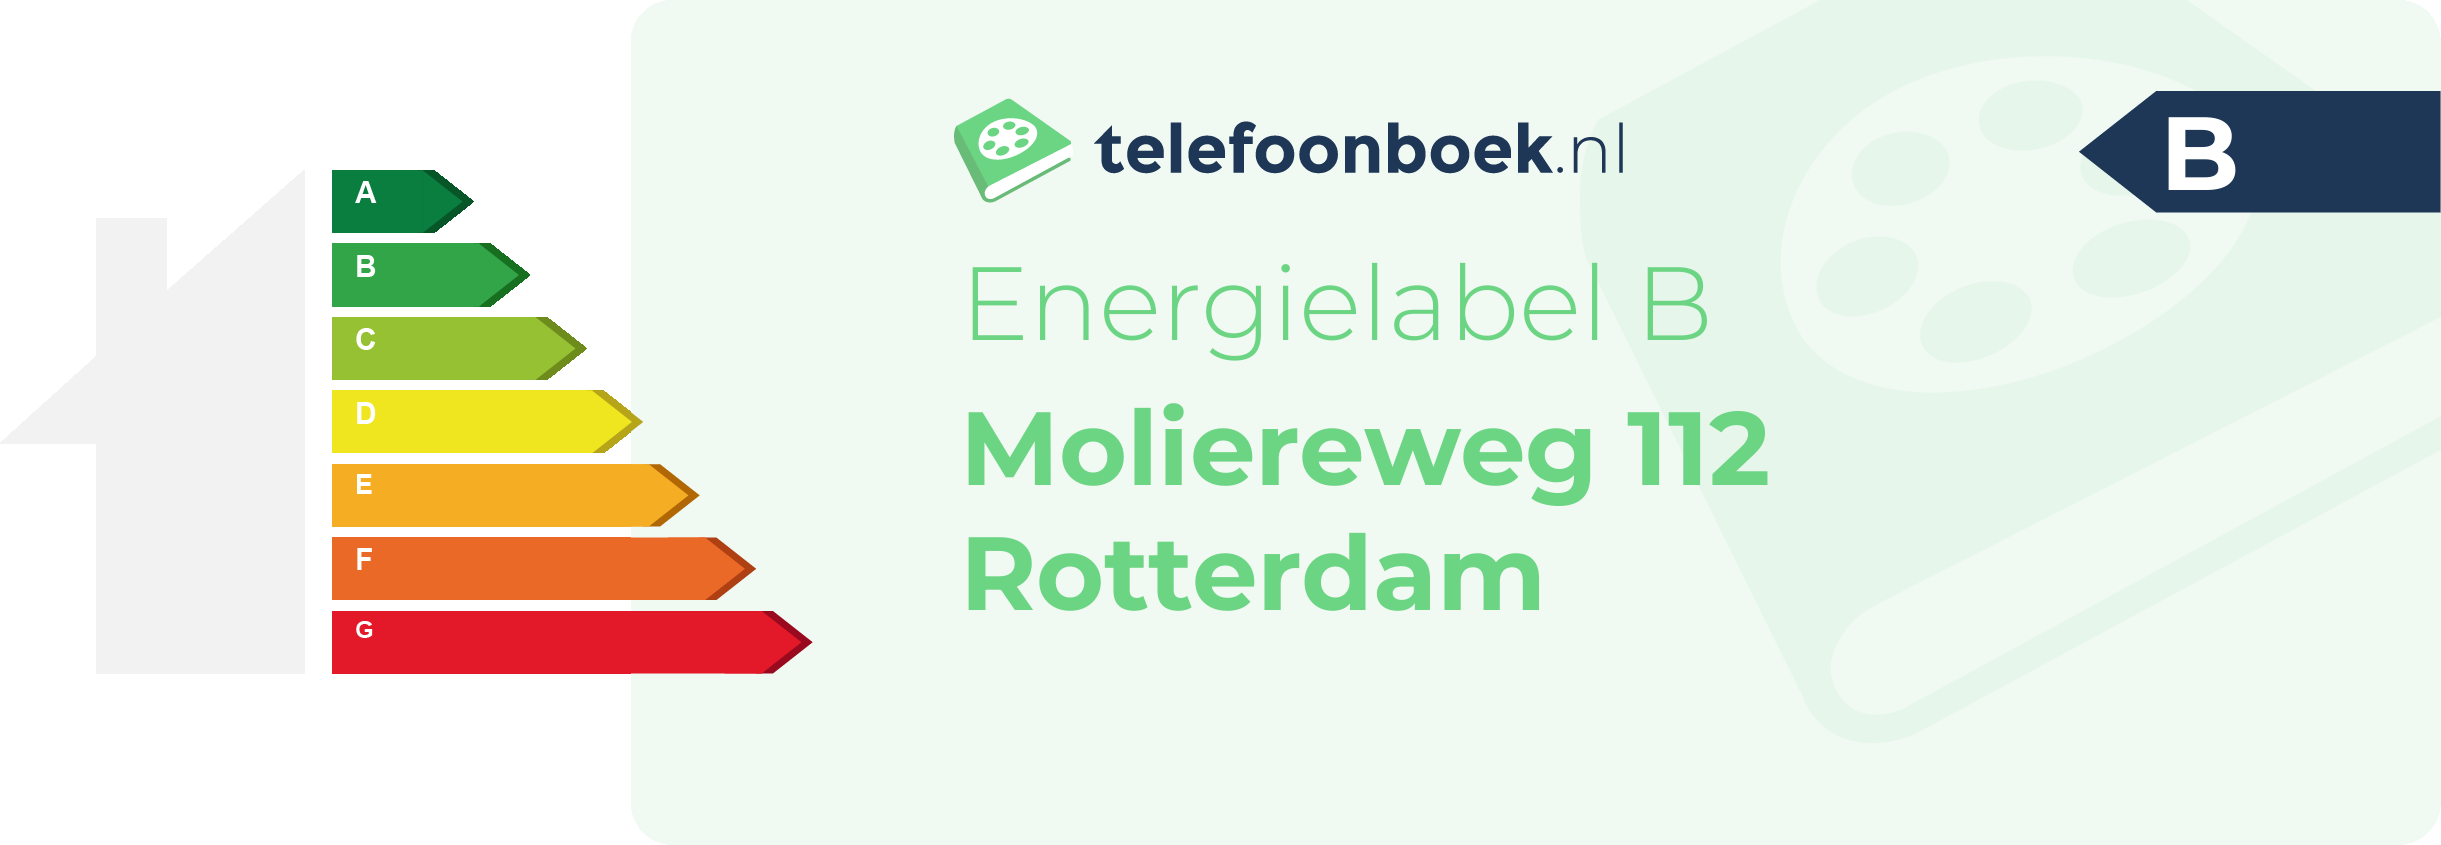 Energielabel Moliereweg 112 Rotterdam